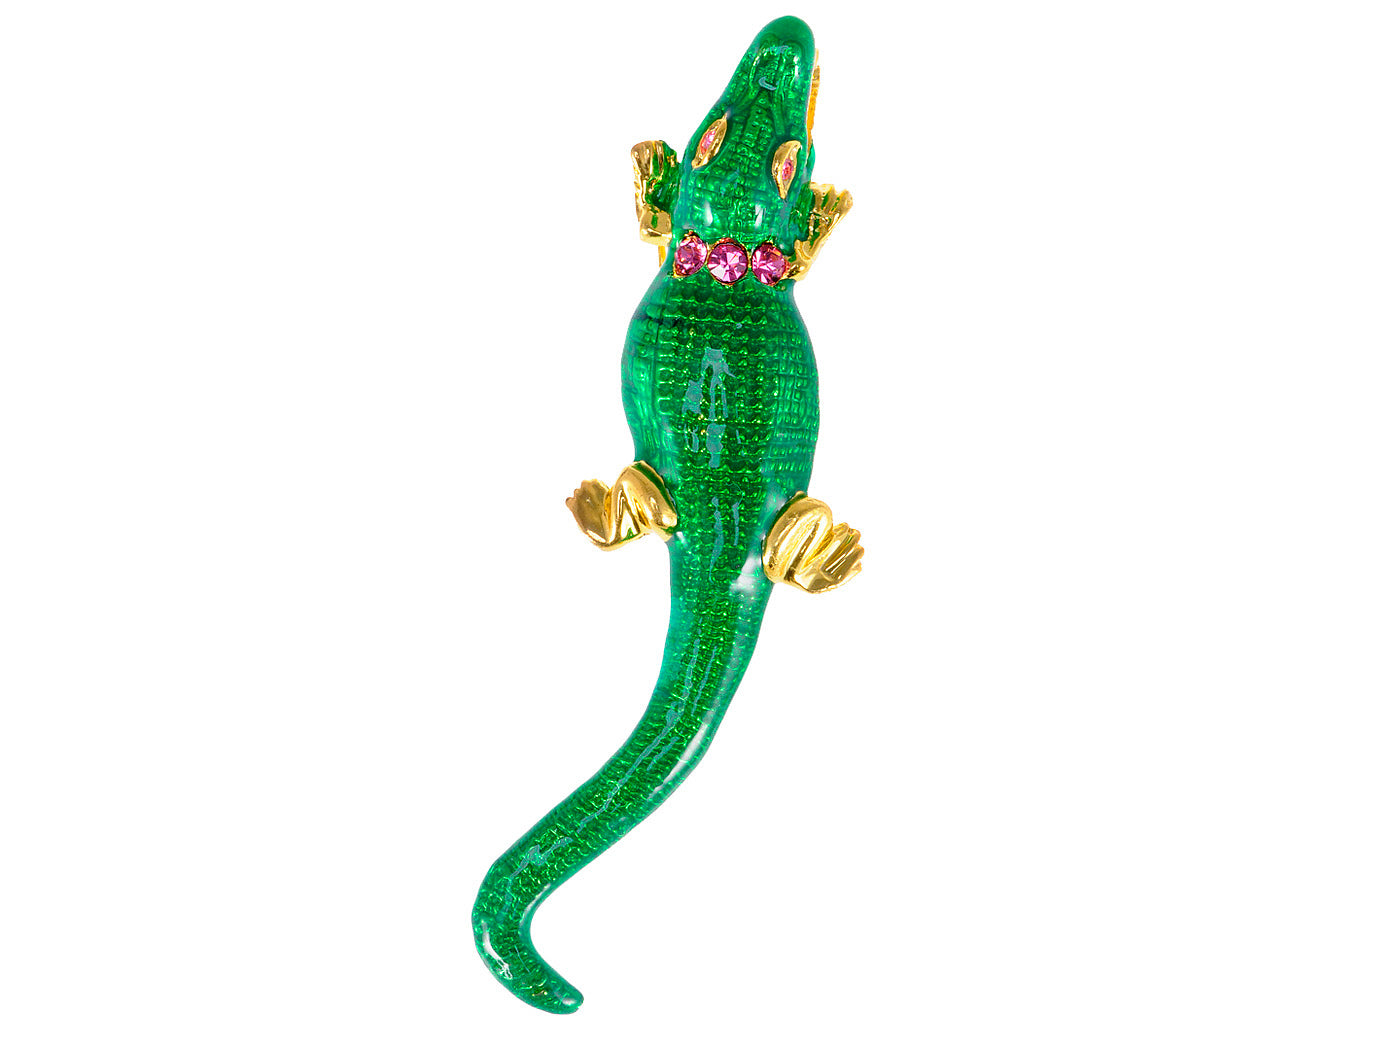 Emerald Green Alligator Bumpy Back Colored Amethyst Pin Brooch